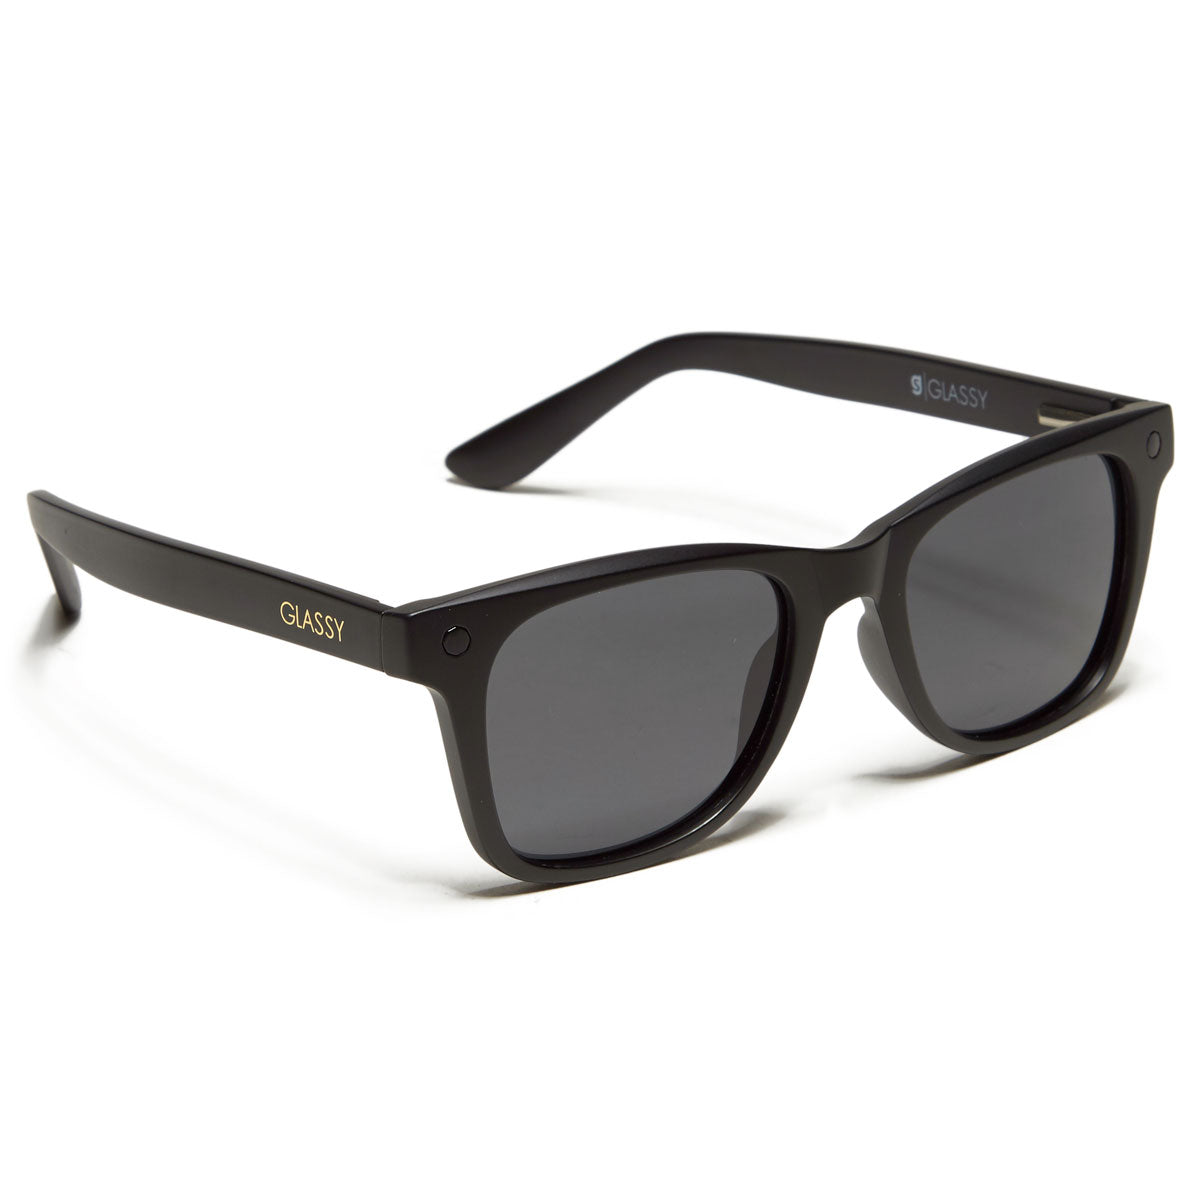 Glassy Harper Premium Polarized Sunglasses - Matte Blackout image 1